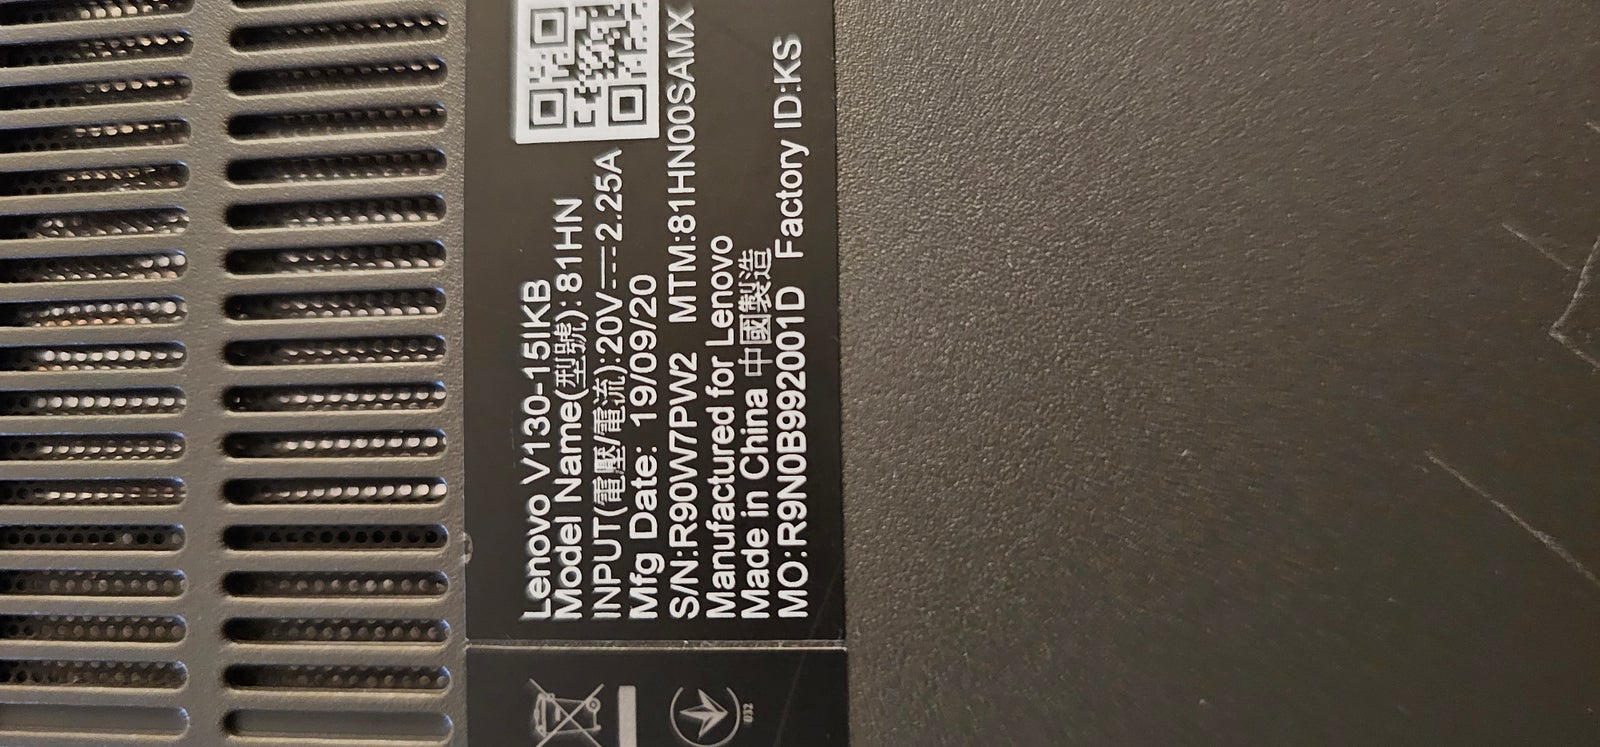 Lenovo V130-15IKB 81HN, Intel Core i7 (7th Gen) 7500U GHz, 8